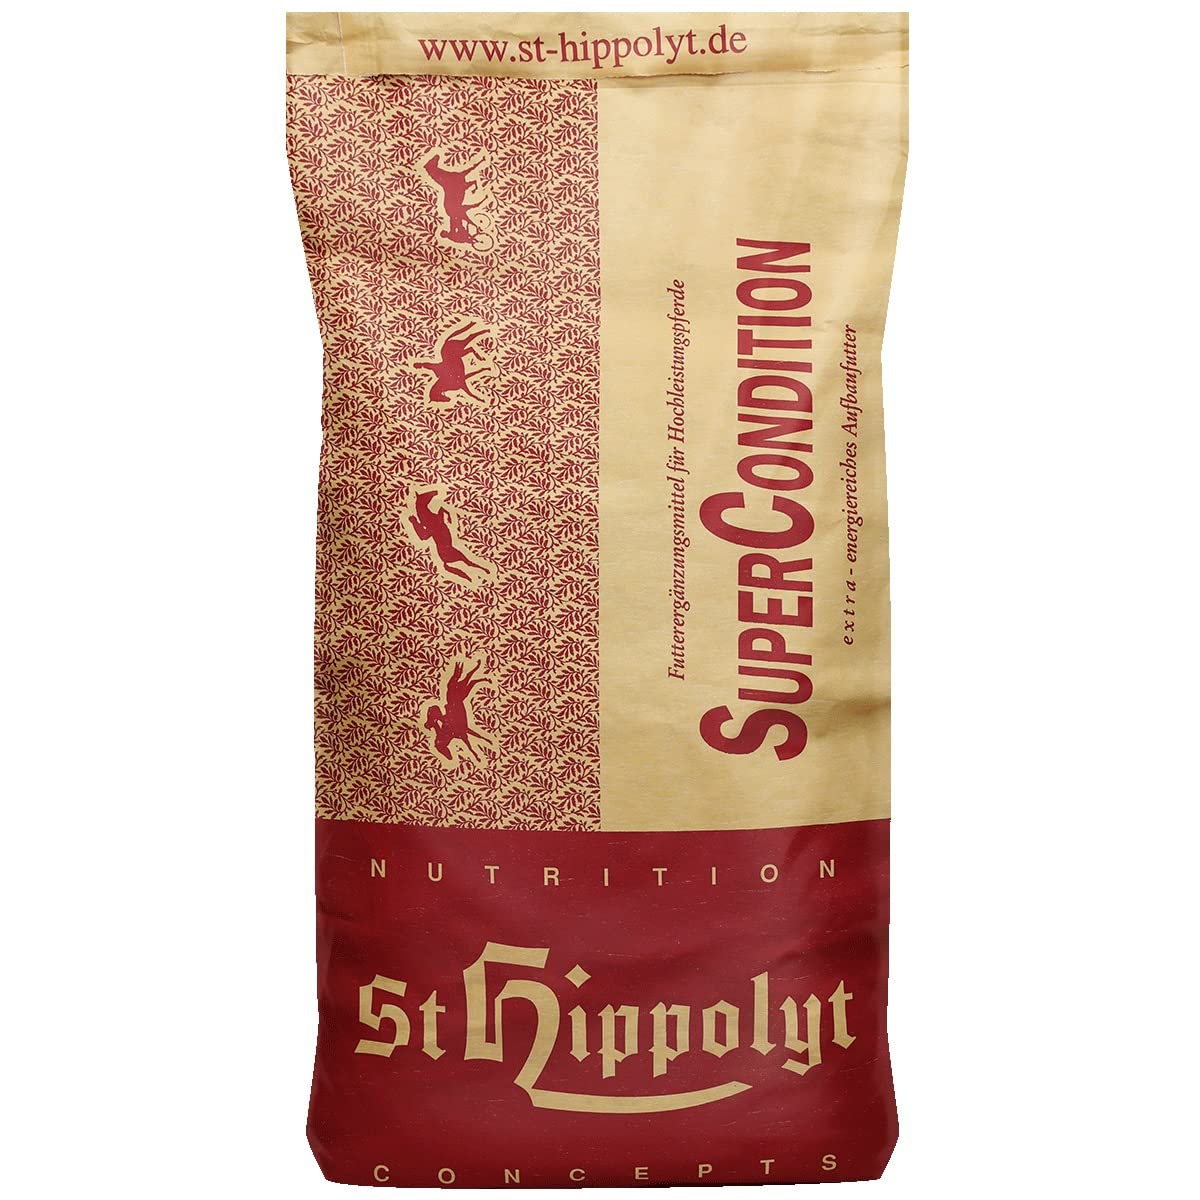 St. Hippolyt Supercondition 20 kg